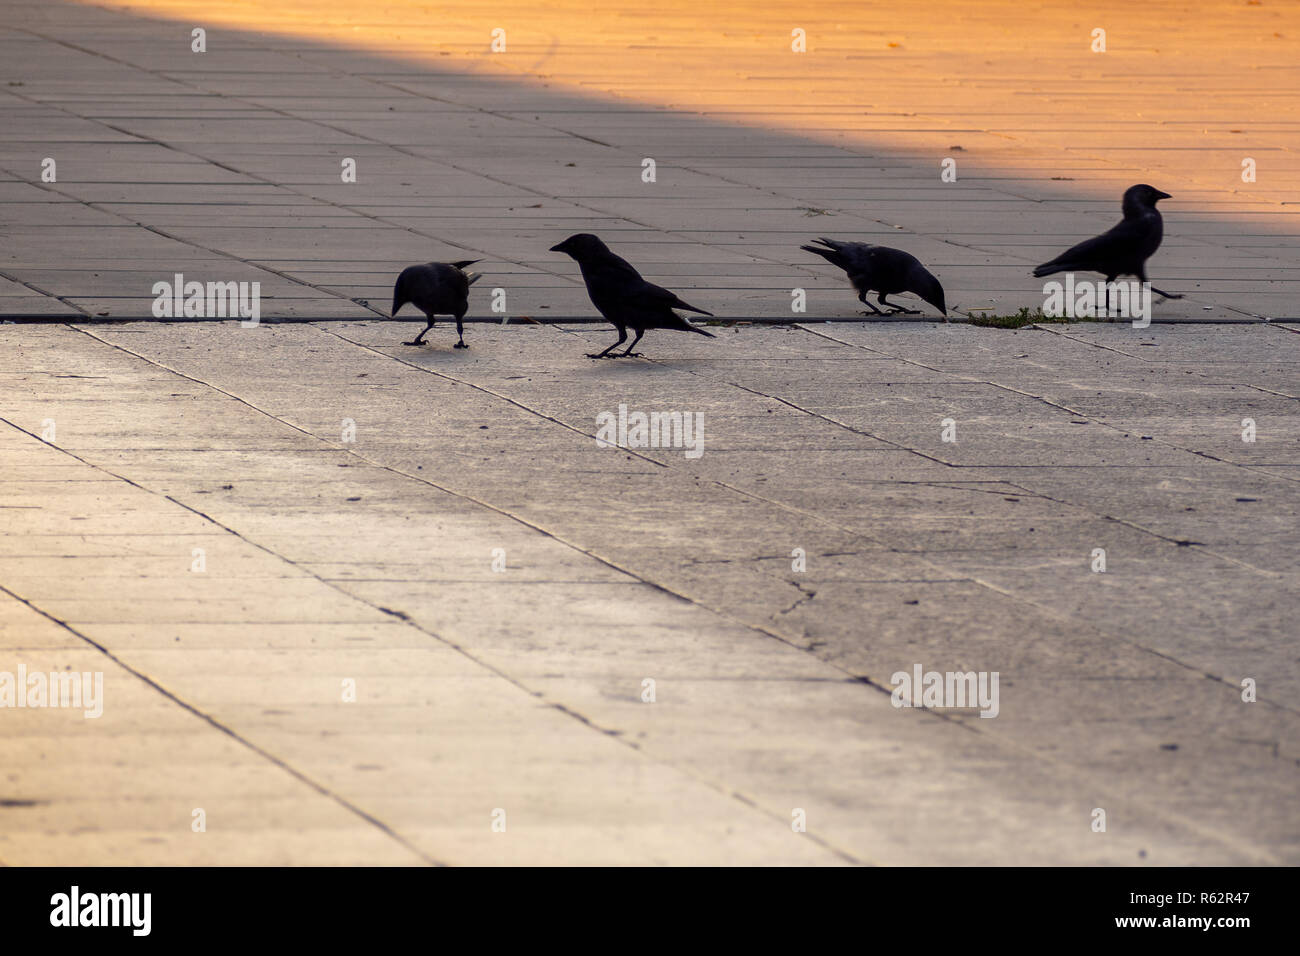 Ravens walking on the street by morning sunrise. Stock Photo